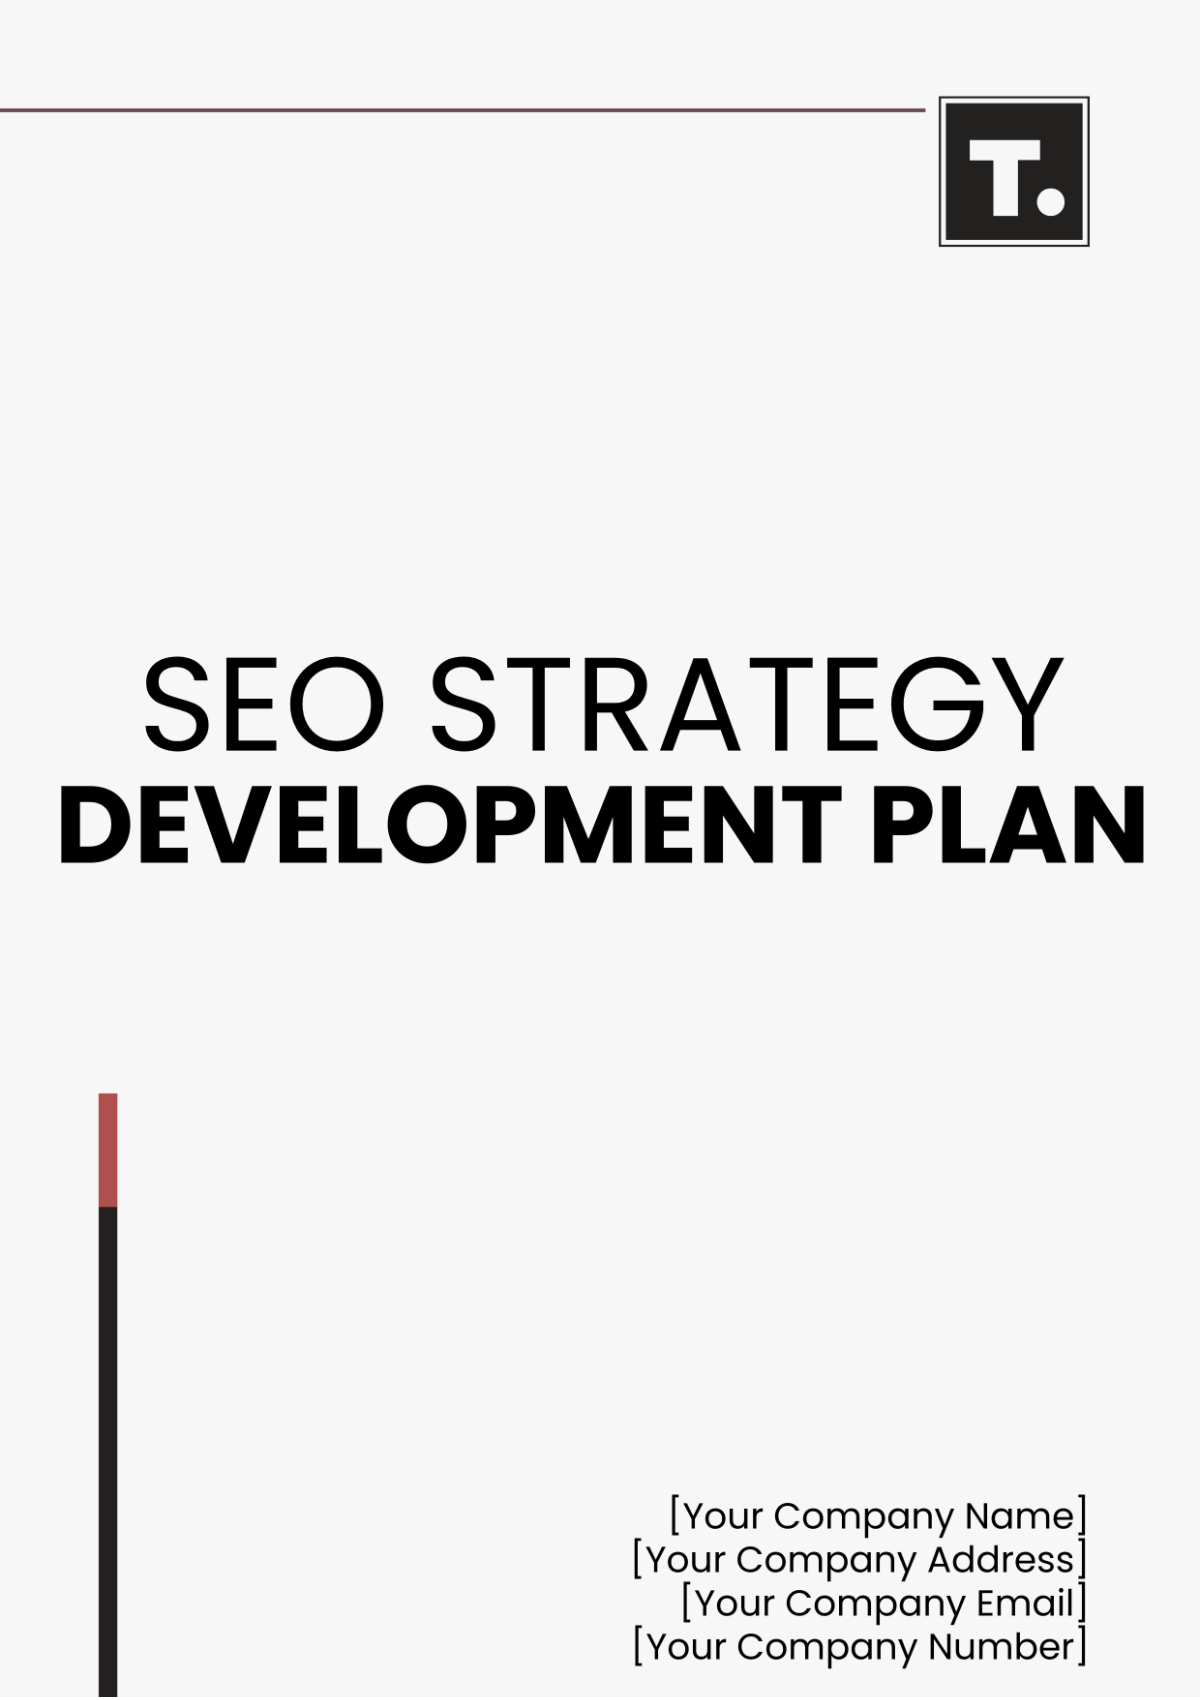 Free SEO Strategy Development Plan Template